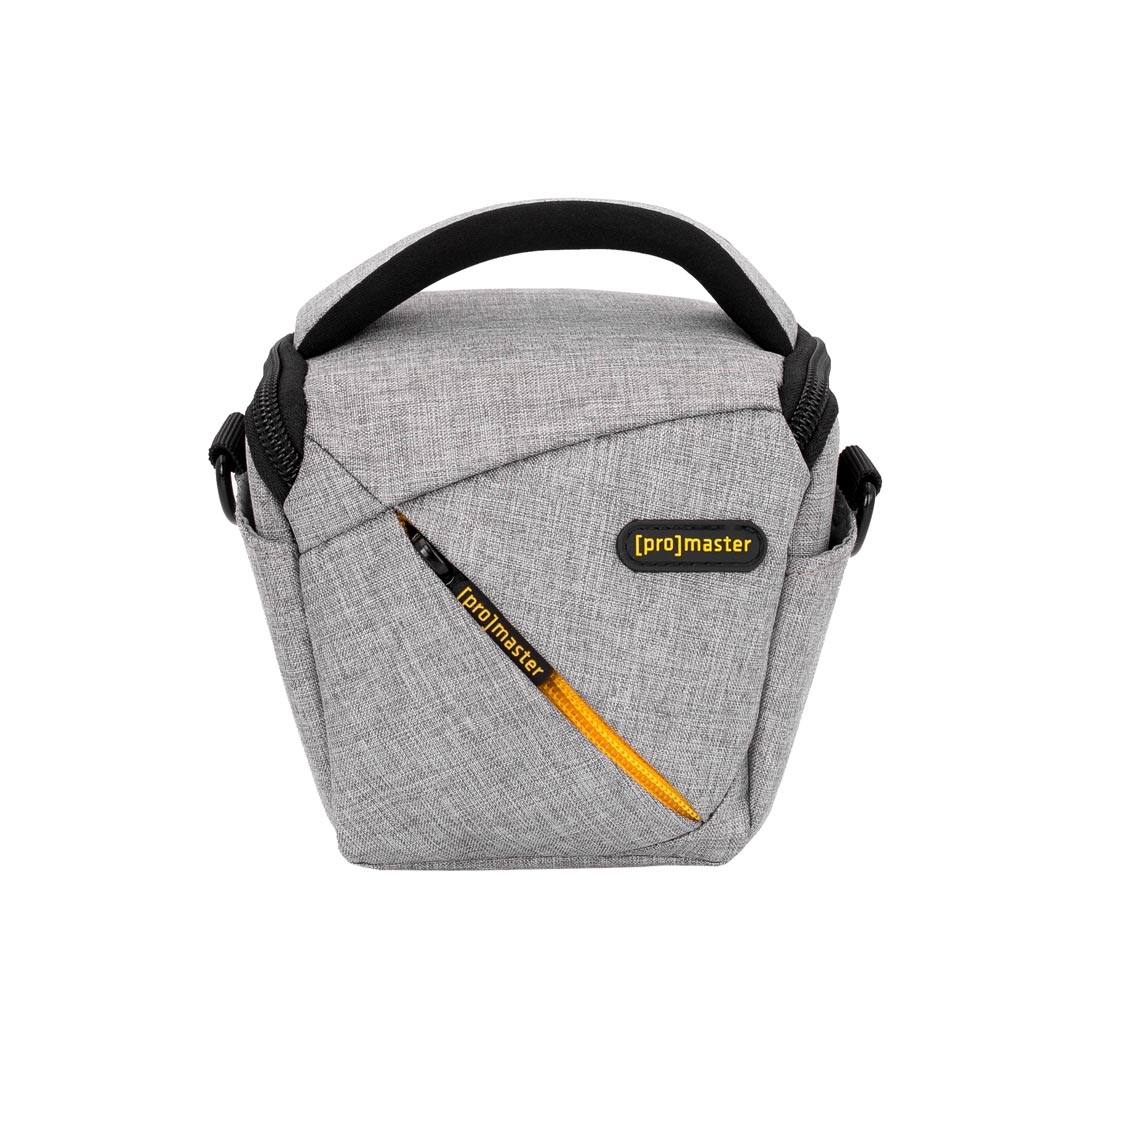 Promaster Impulse Holster Bag Small (grey)